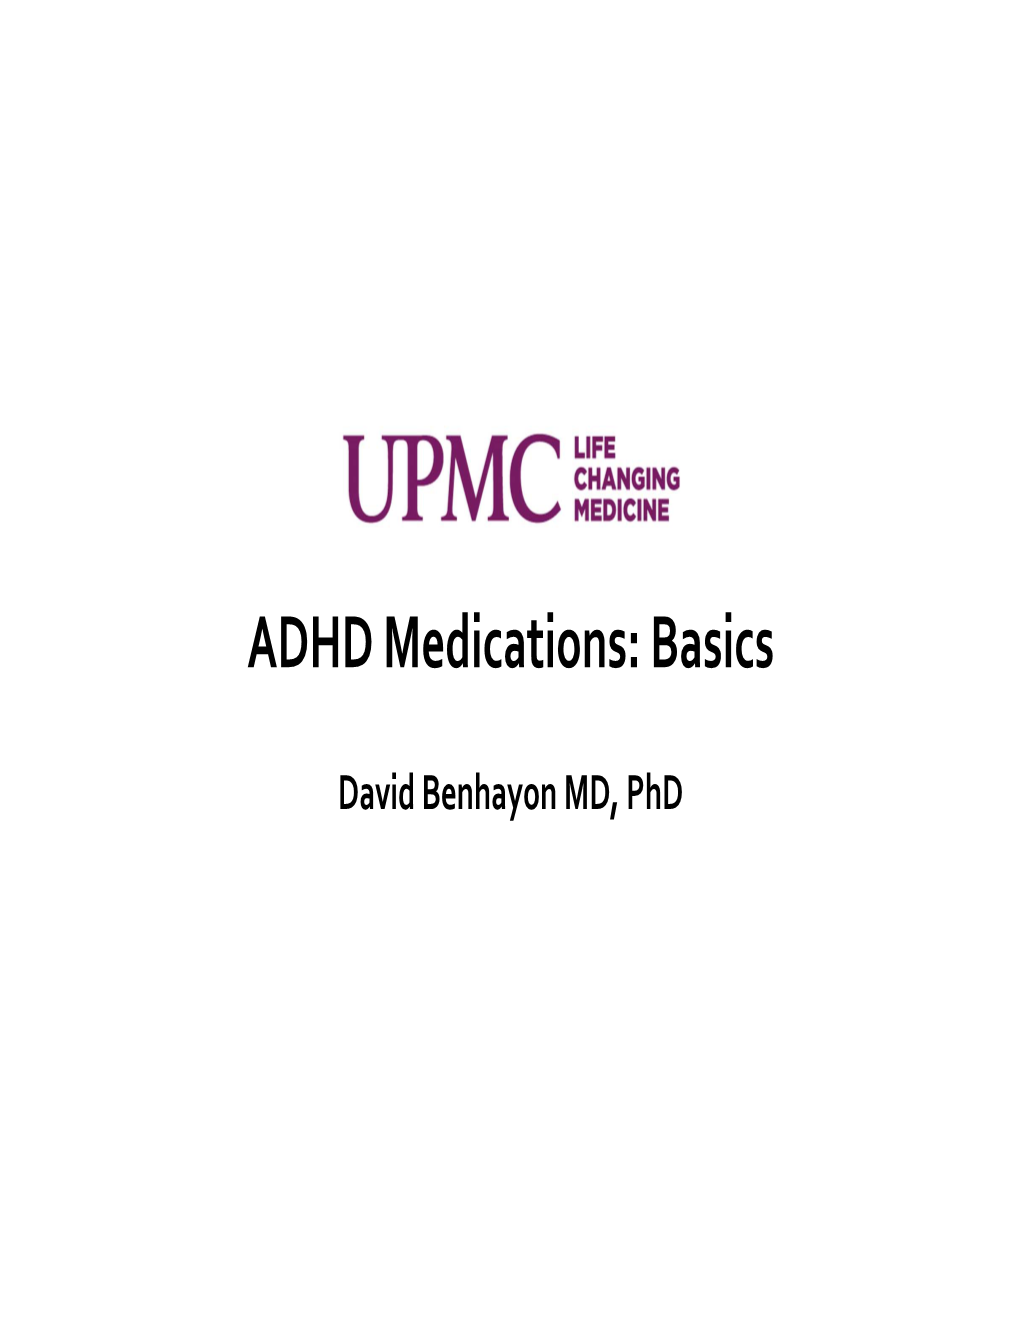 ADHD Medications: Basics